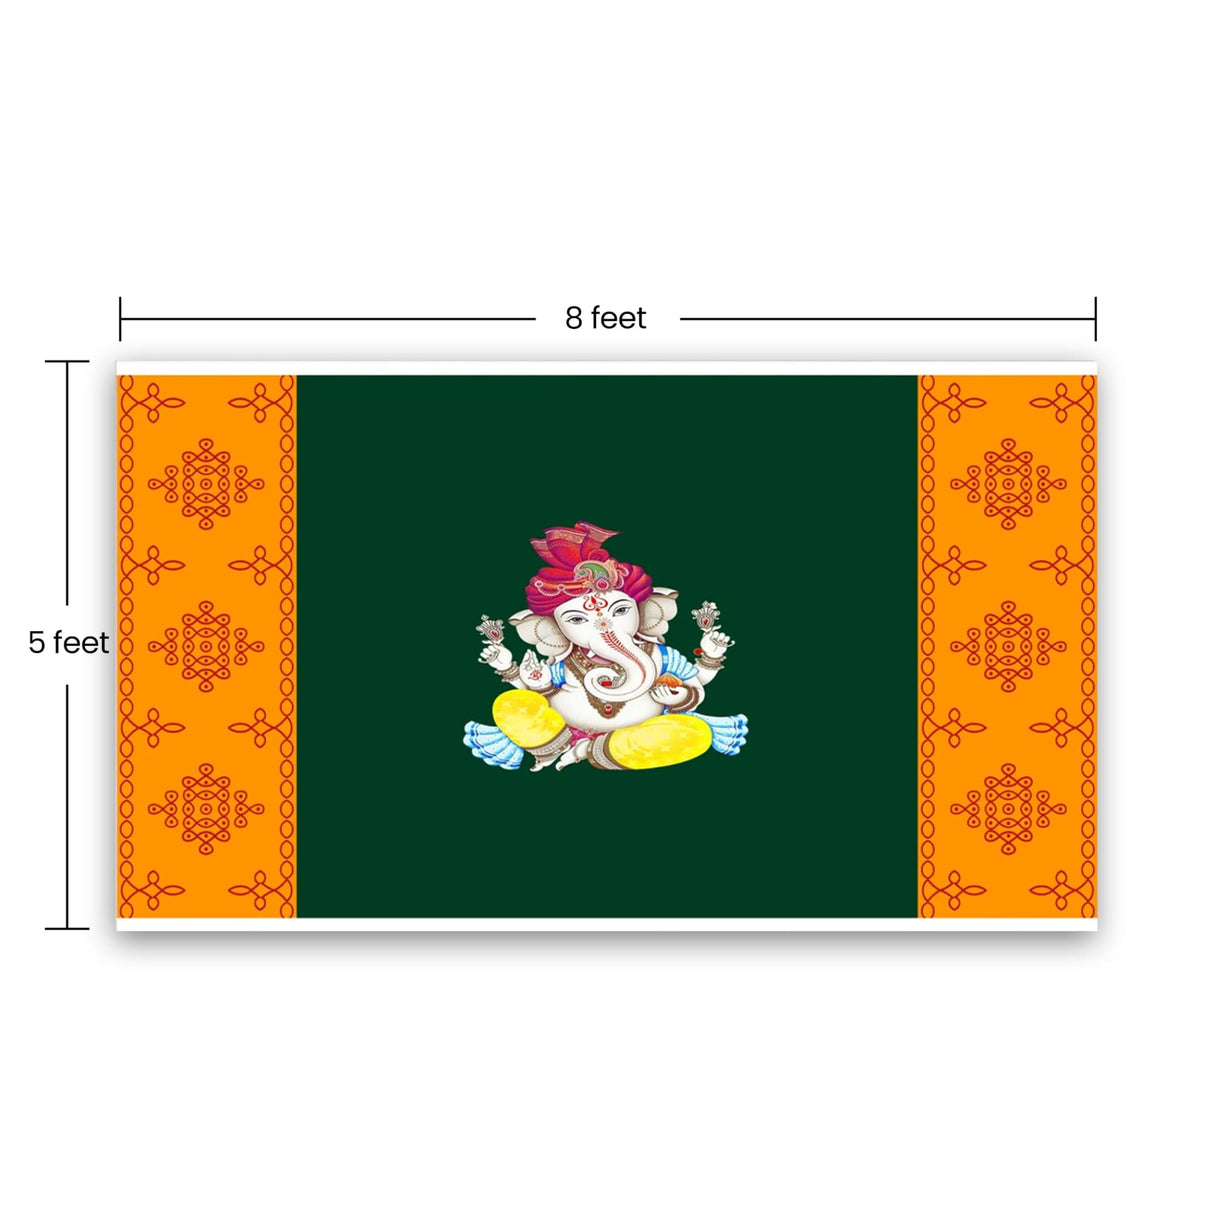 Ganesh with kolam design backdrop 5x8 feet indian